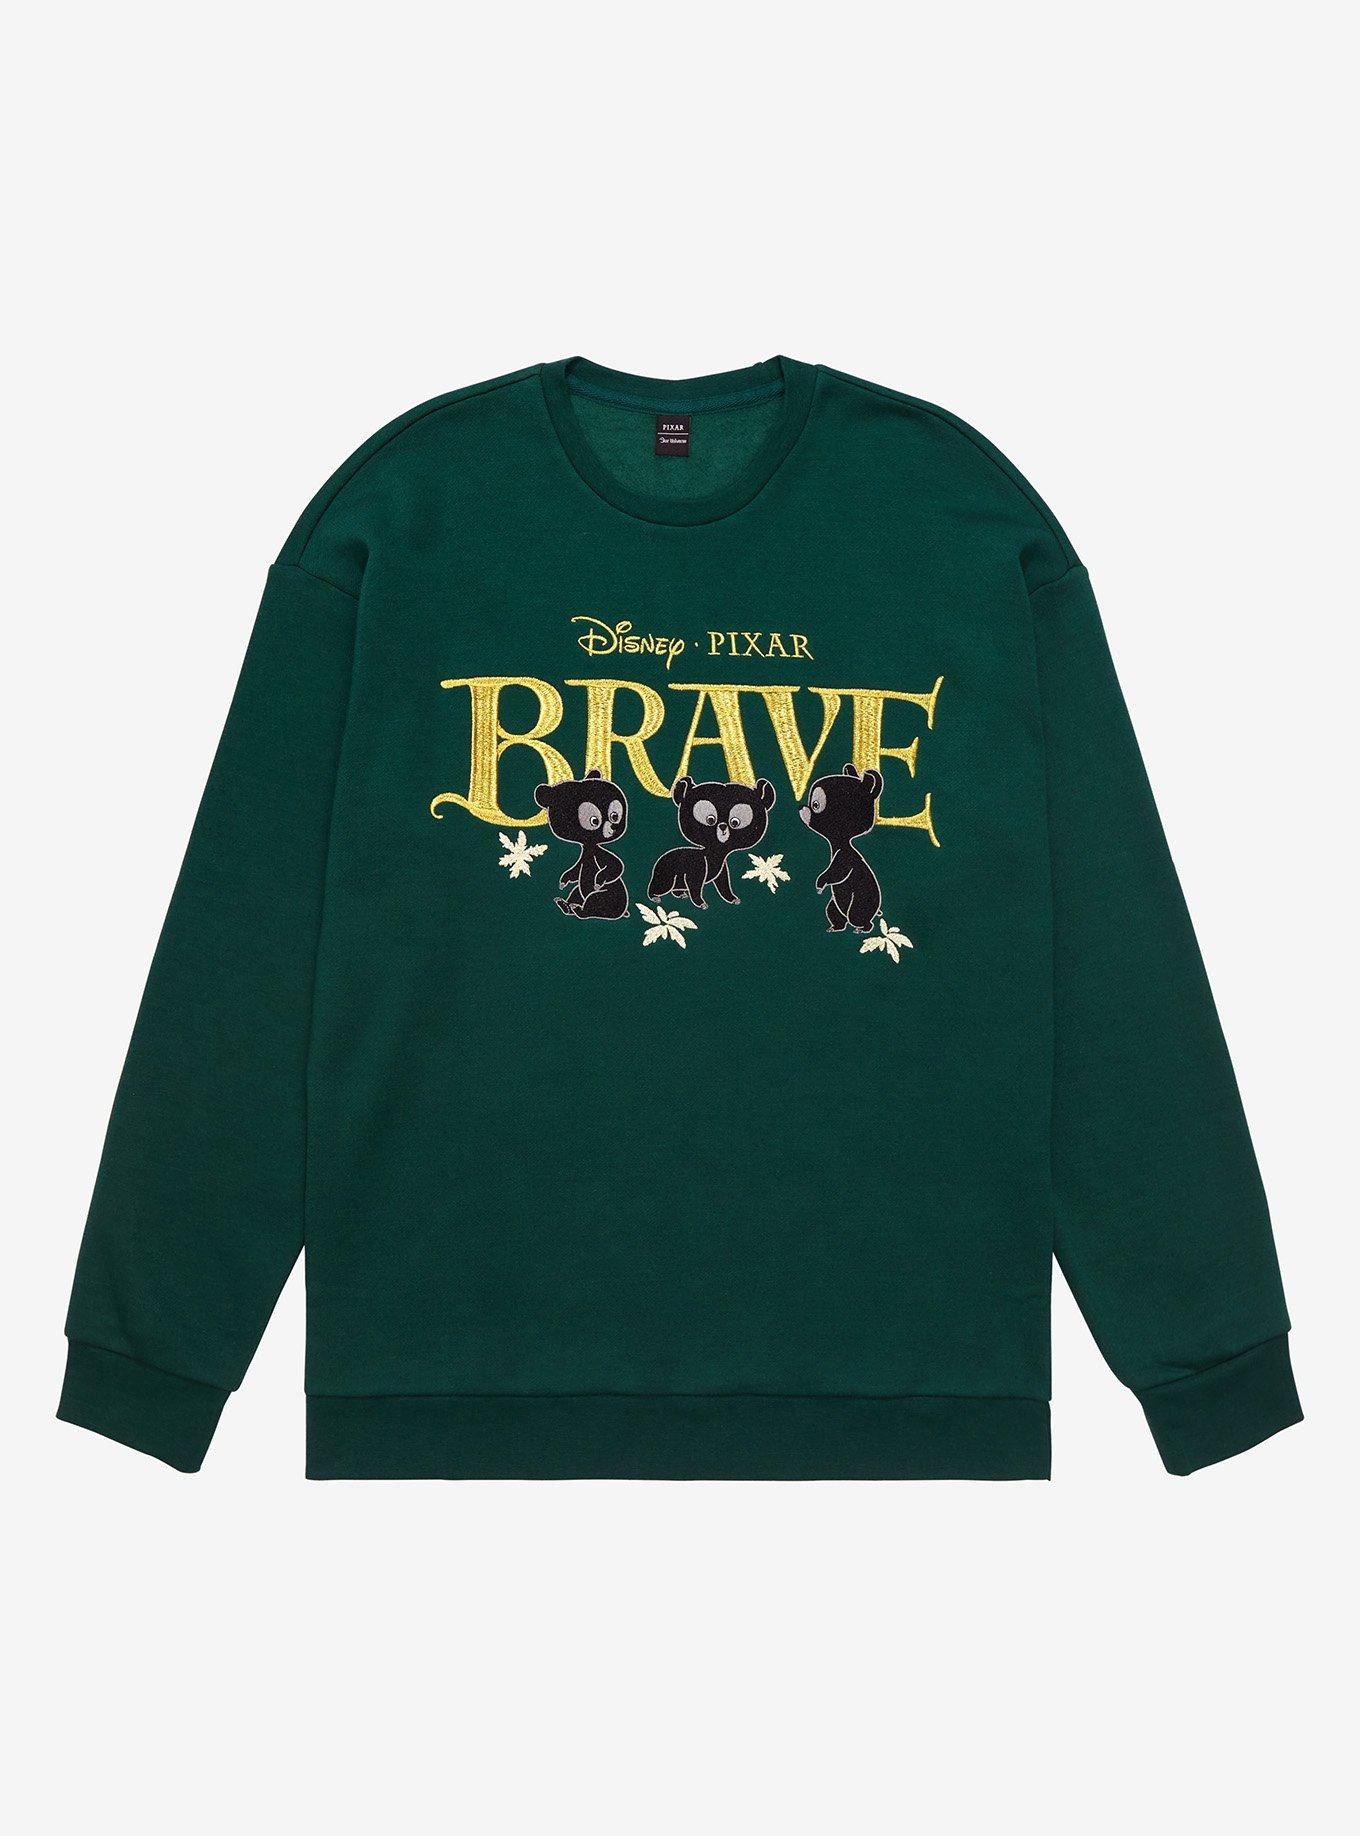 Our Universe Disney Pixar Brave Bear Brothers Sweatshirt | Her Universe